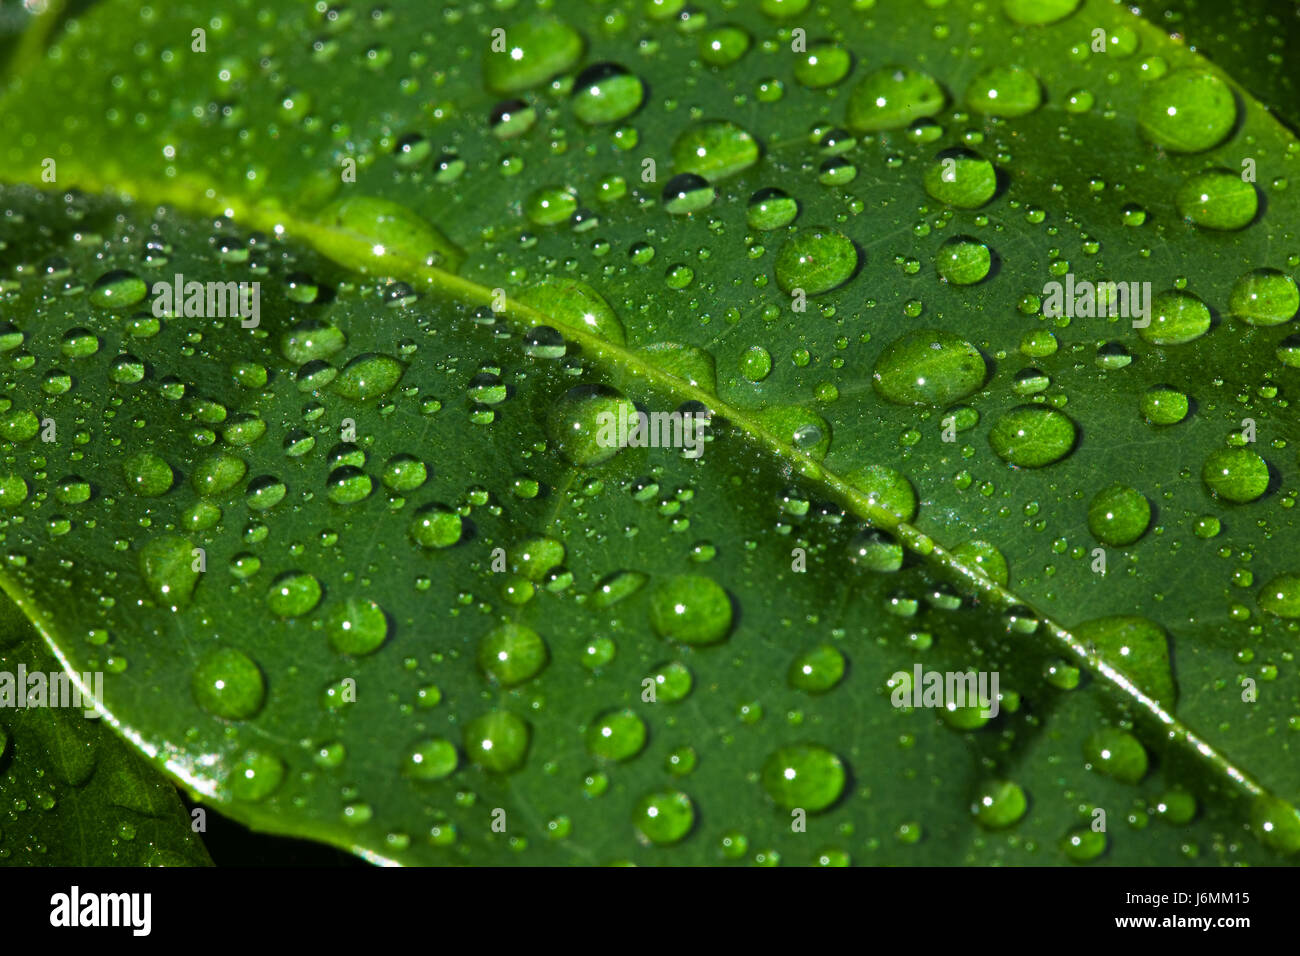 leaf green lotus water drop waterdrop water drop drip drops seeping sopping Stock Photo